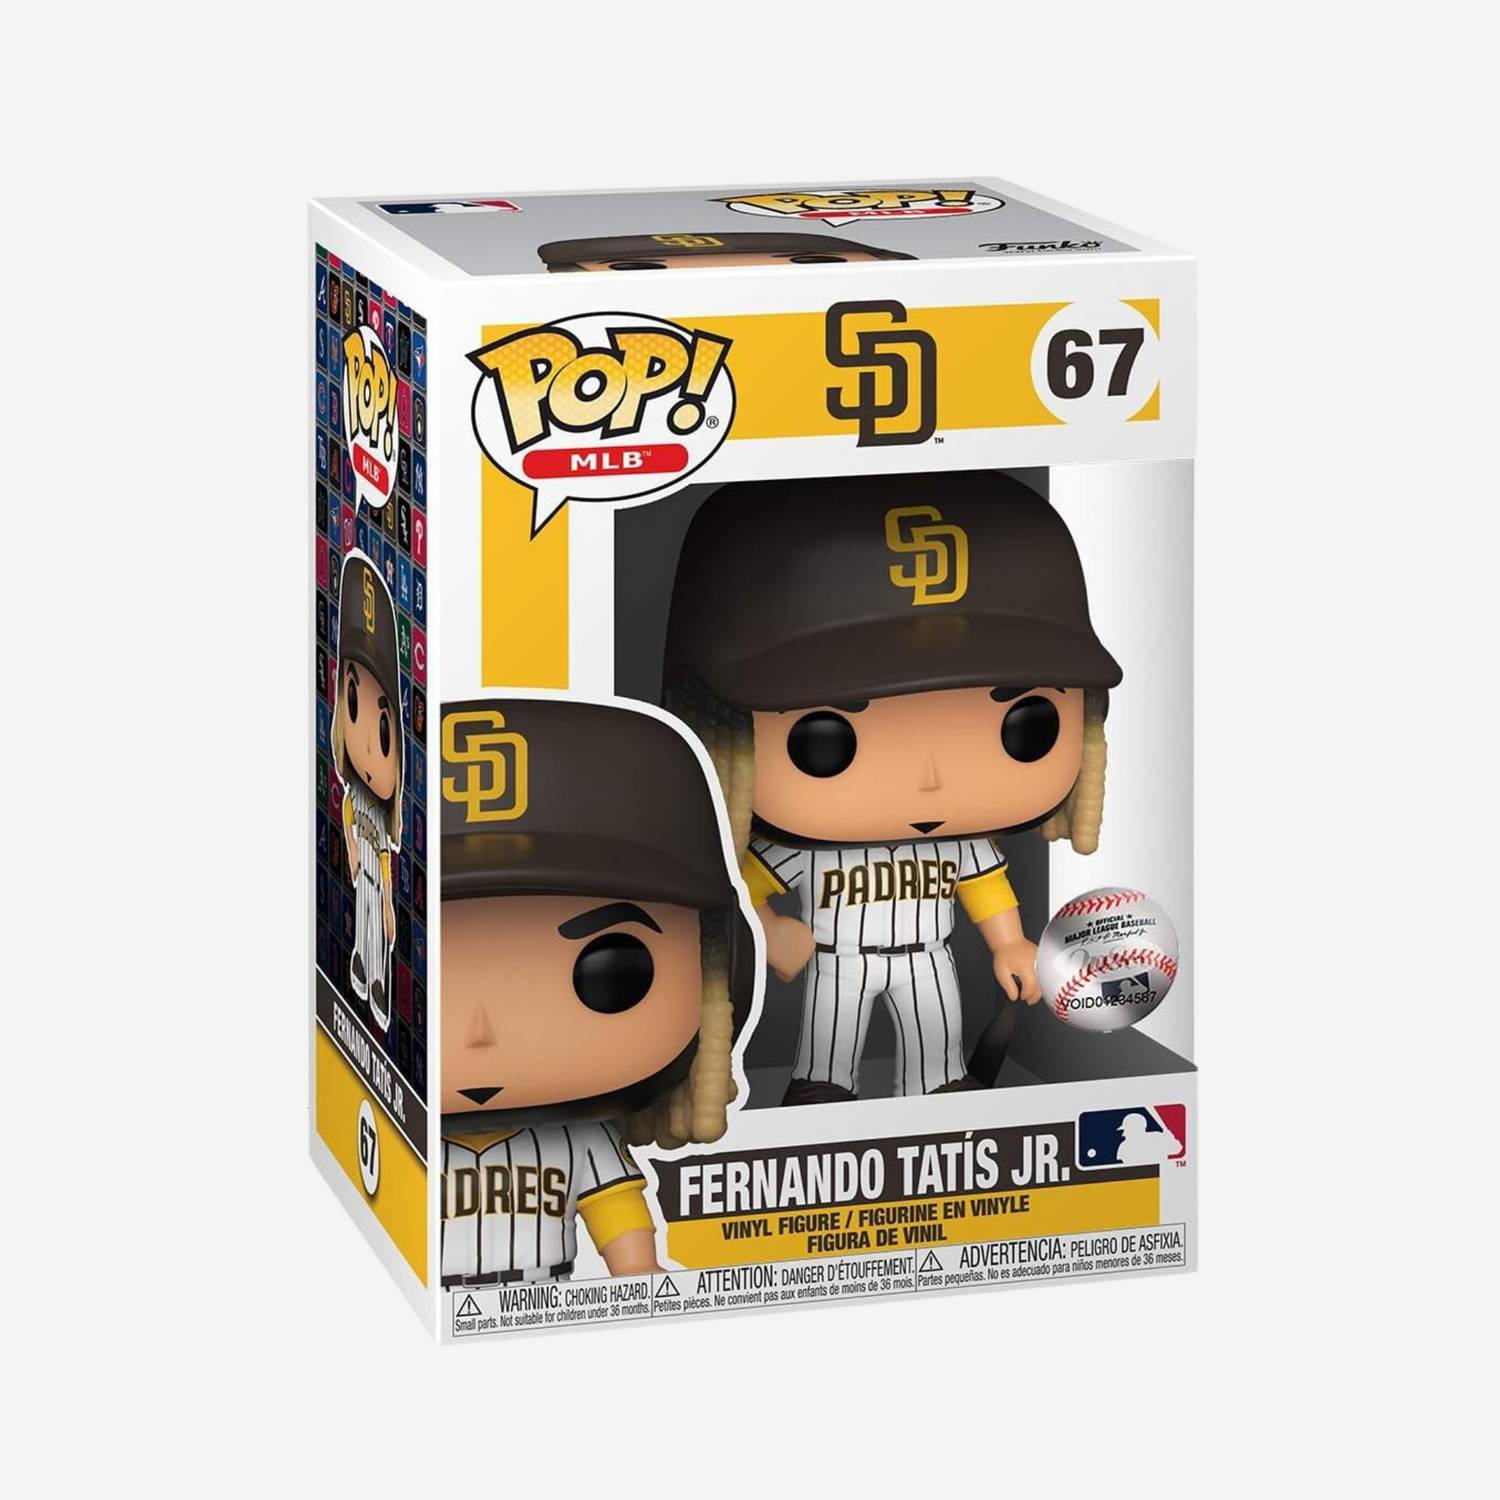 Funko POP MLB: Padres - Fernando Tatís Jr. 3.75 inches